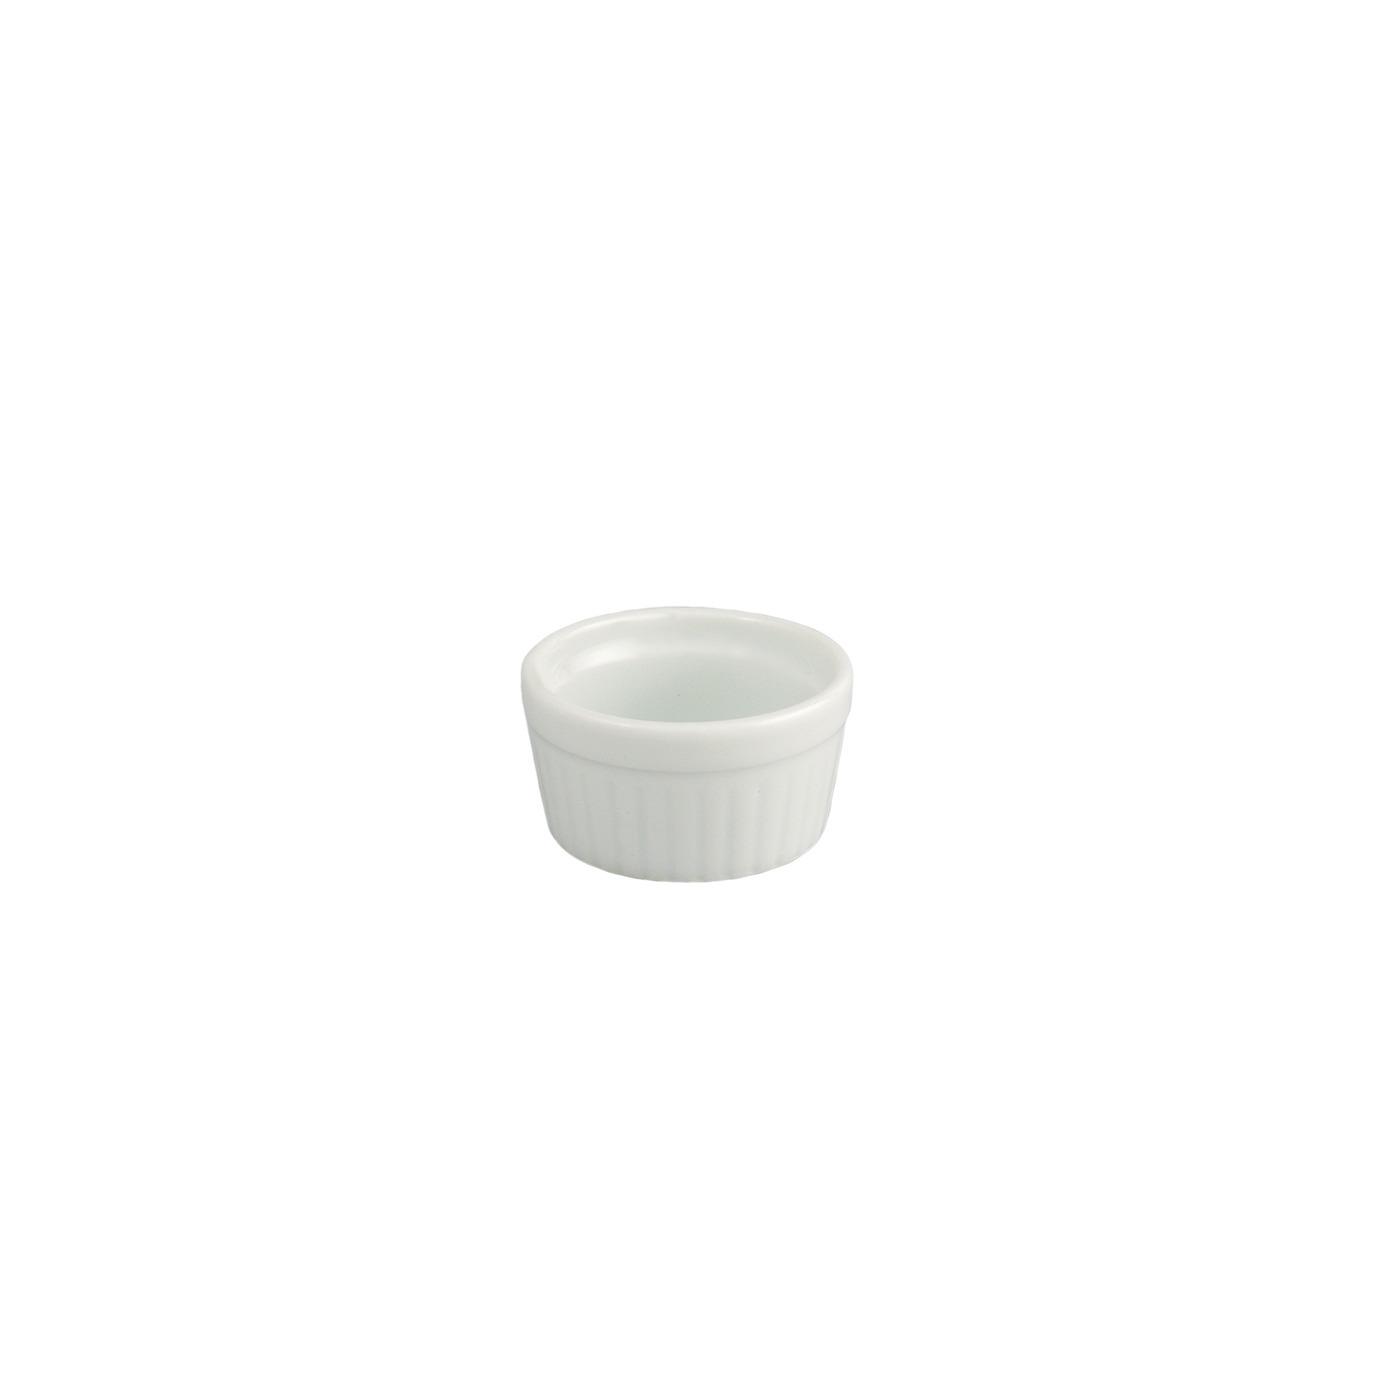 White Ceramic Ramekin - 2"